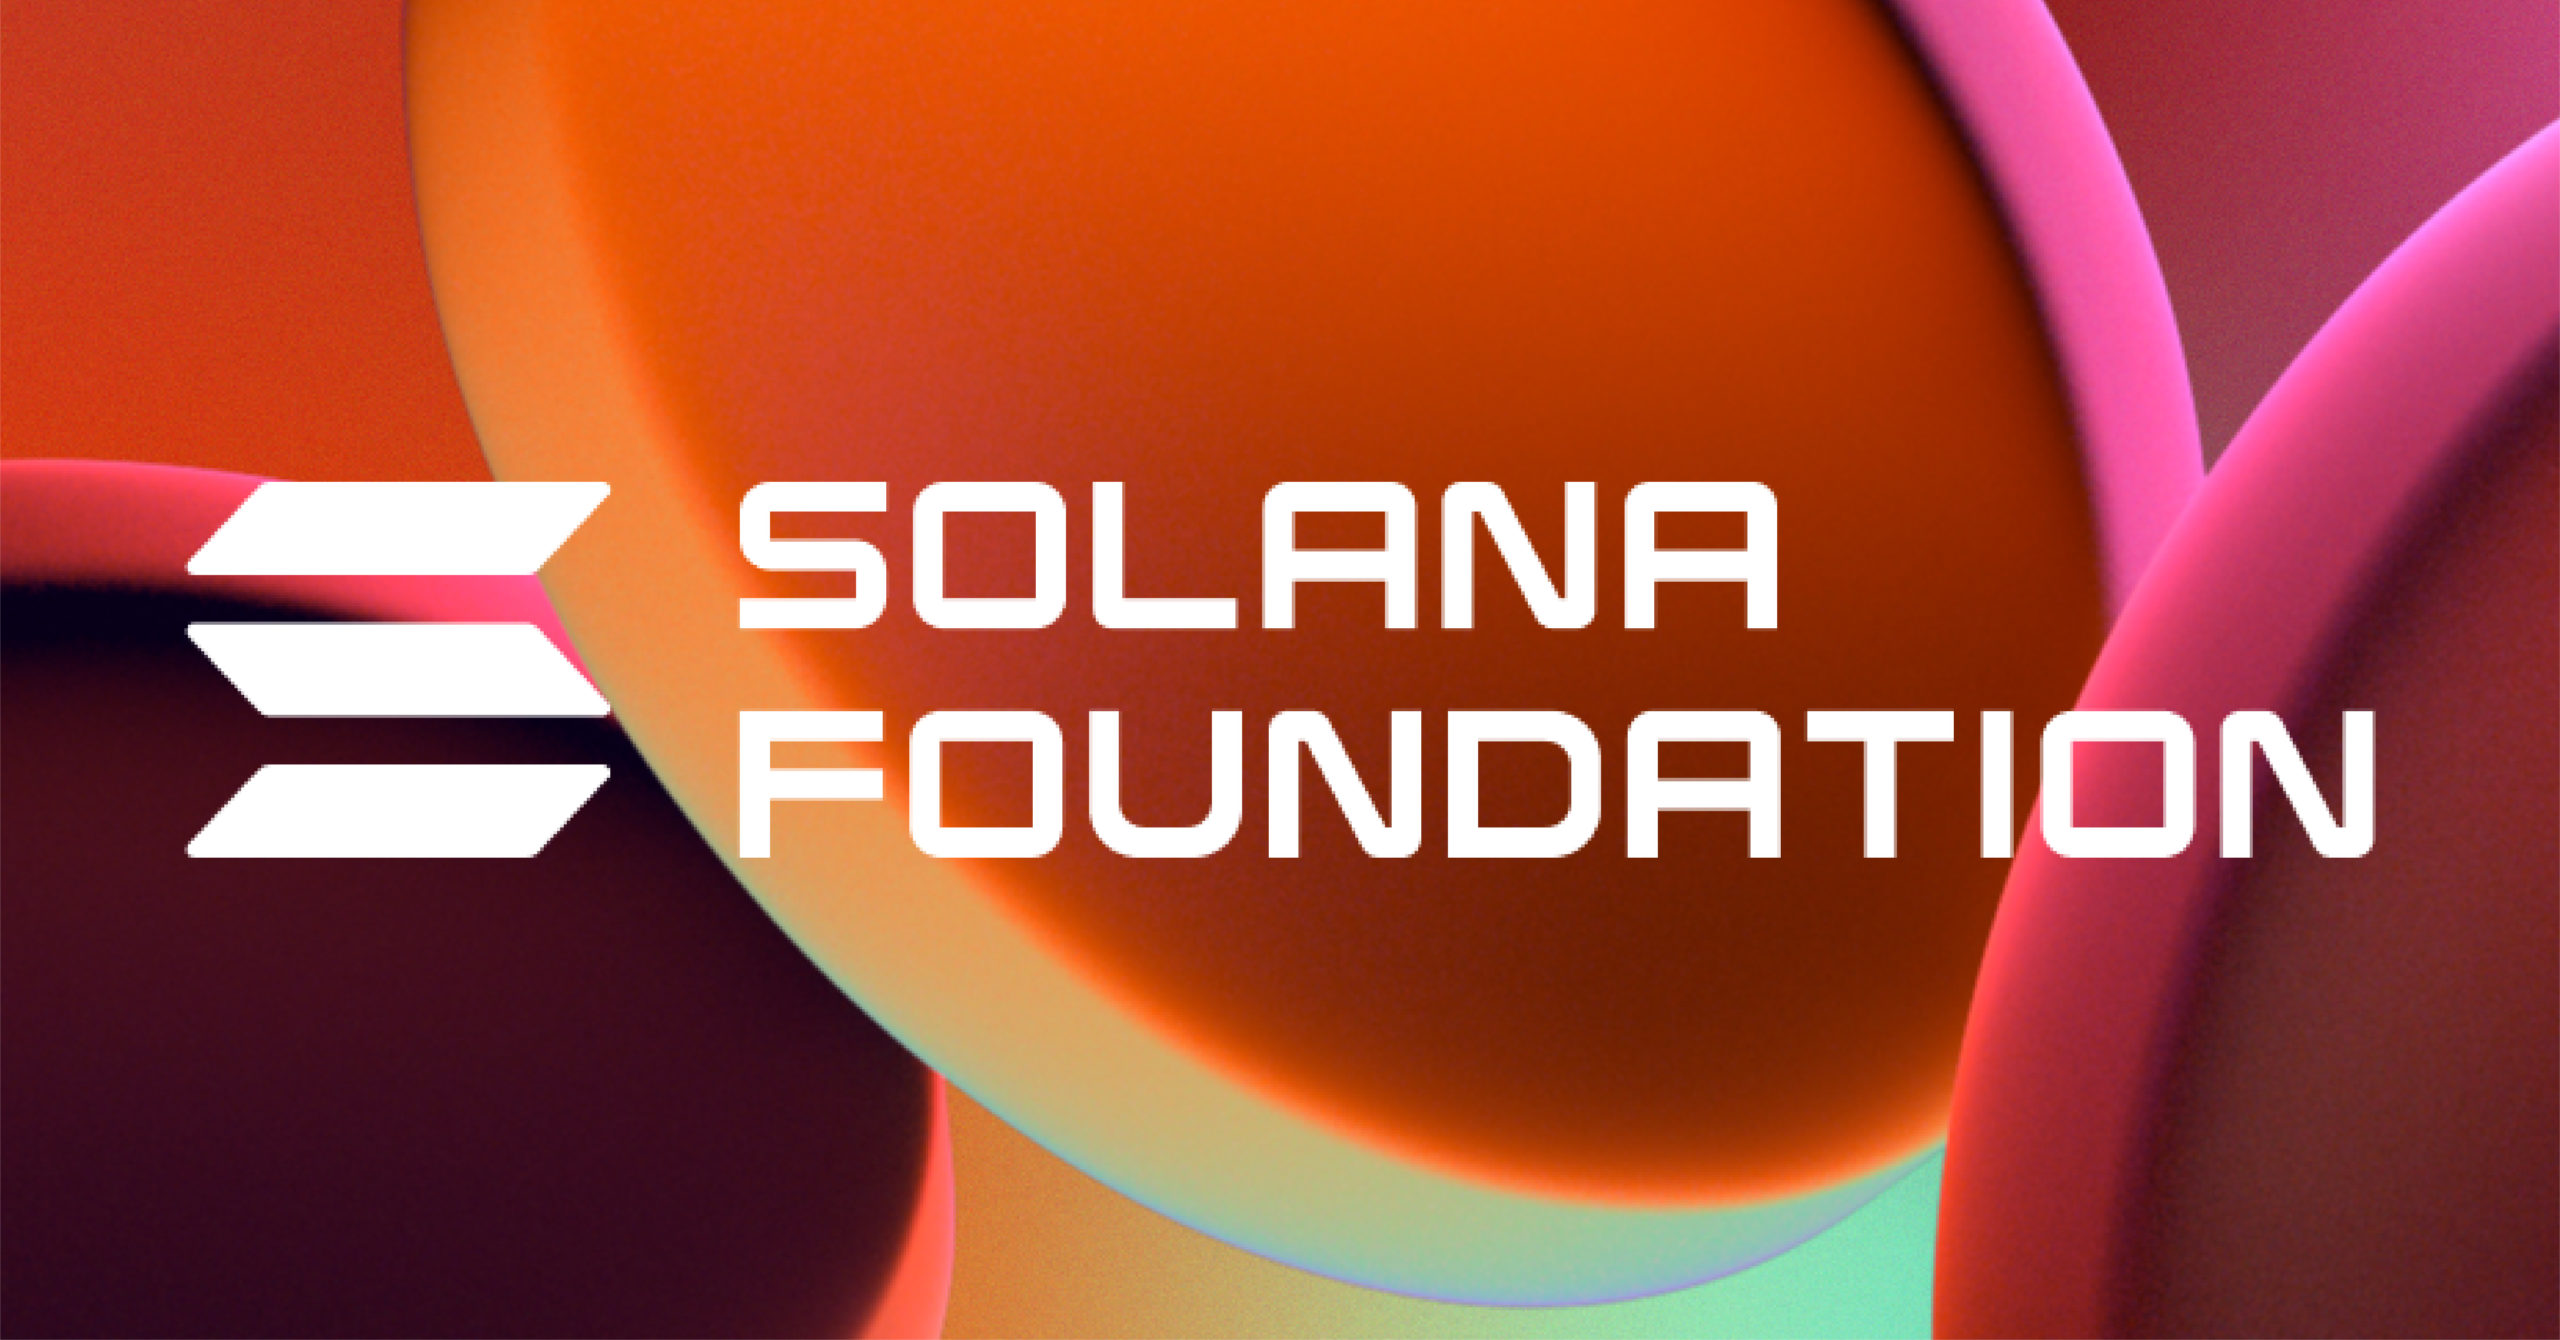 Solana Foundation canh bao ve su co bao mat voi Mailchimp - anh 1